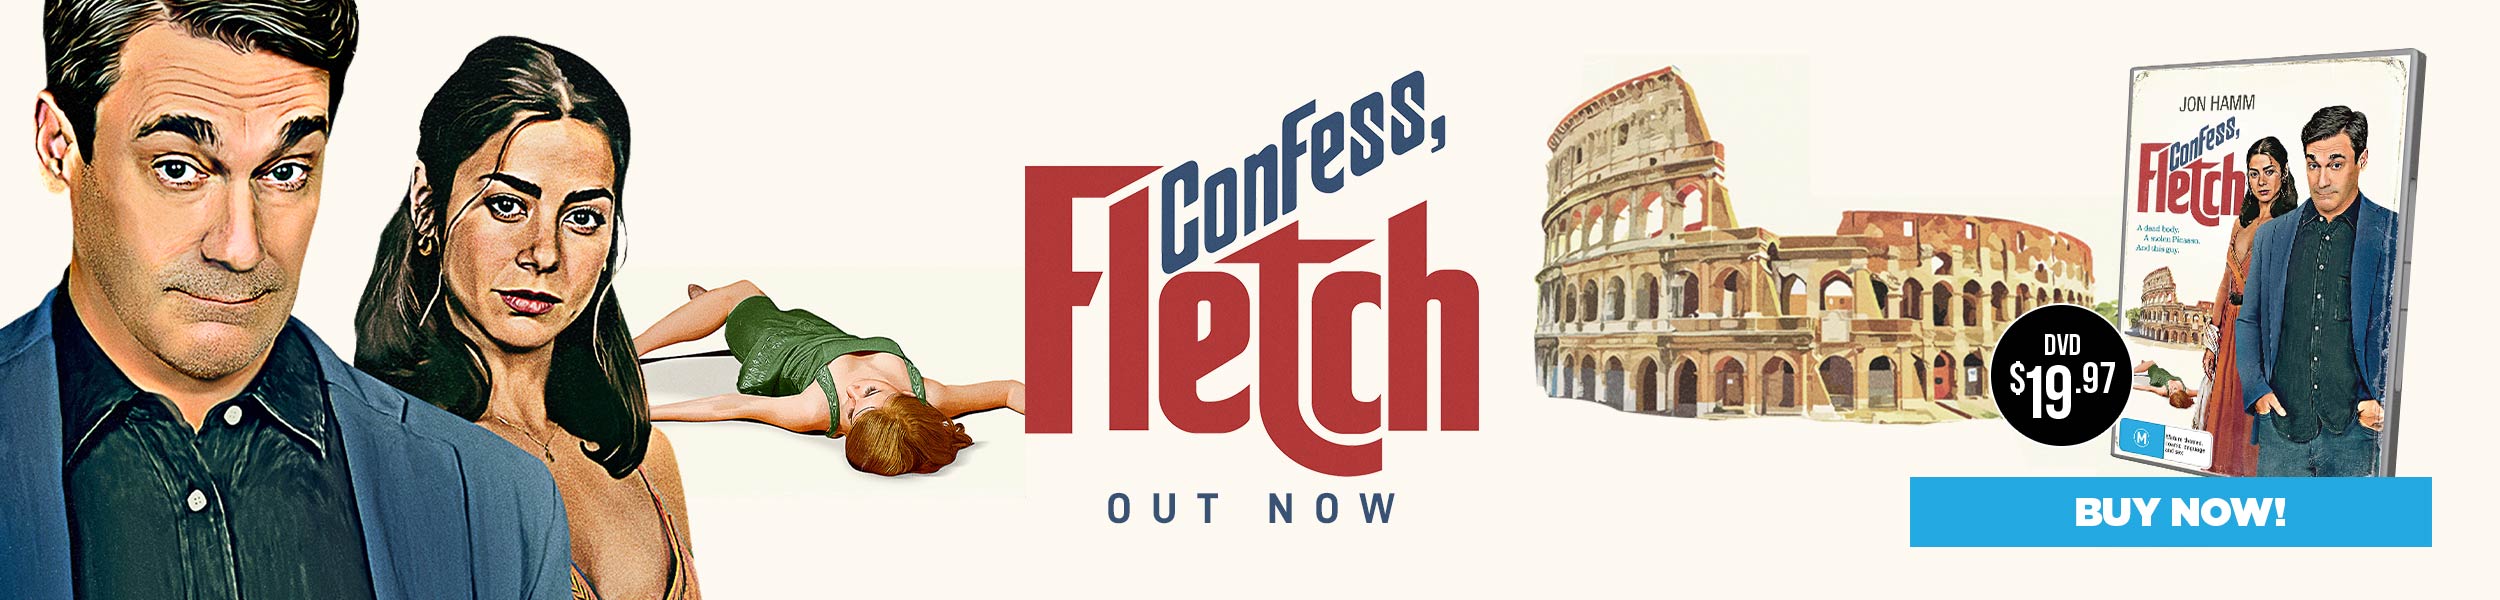 Confess-Fletch